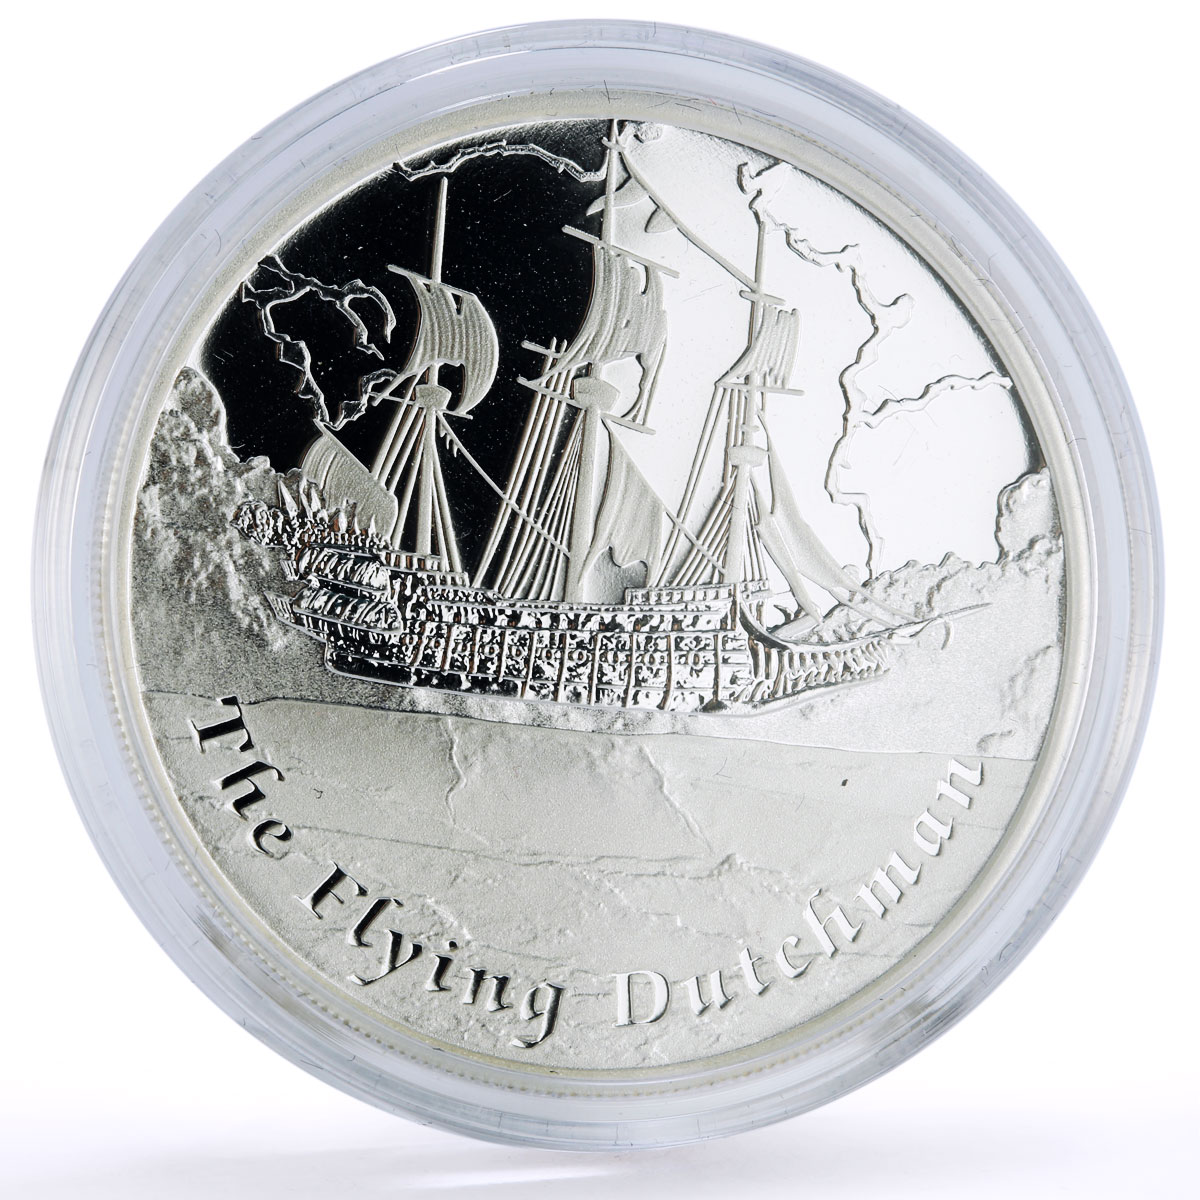 Tuvalu 1 dollar Seafaring Flying Dutchman Ship Clipper proof silver coin 2013